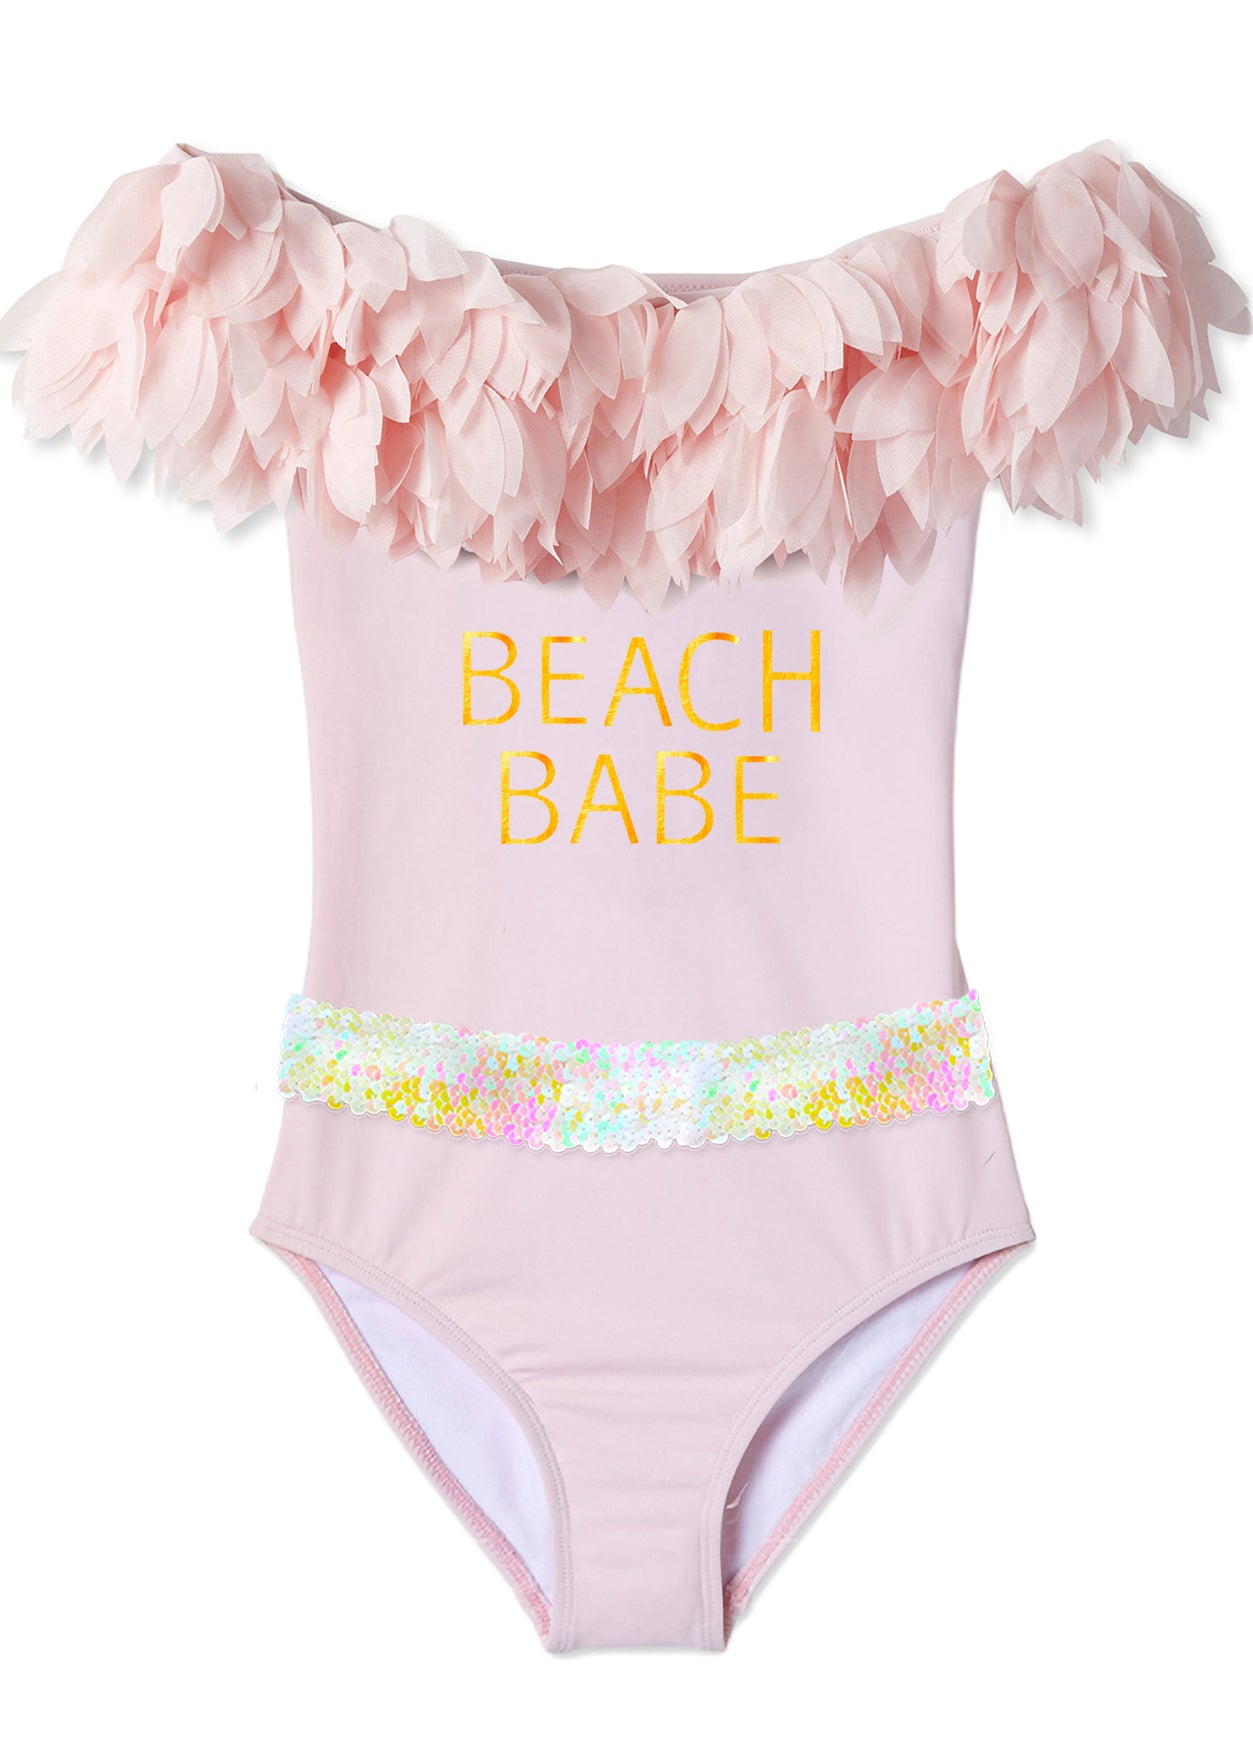 pink beachwear for girls, pink swimwear for girls, pink swimsuit for girls